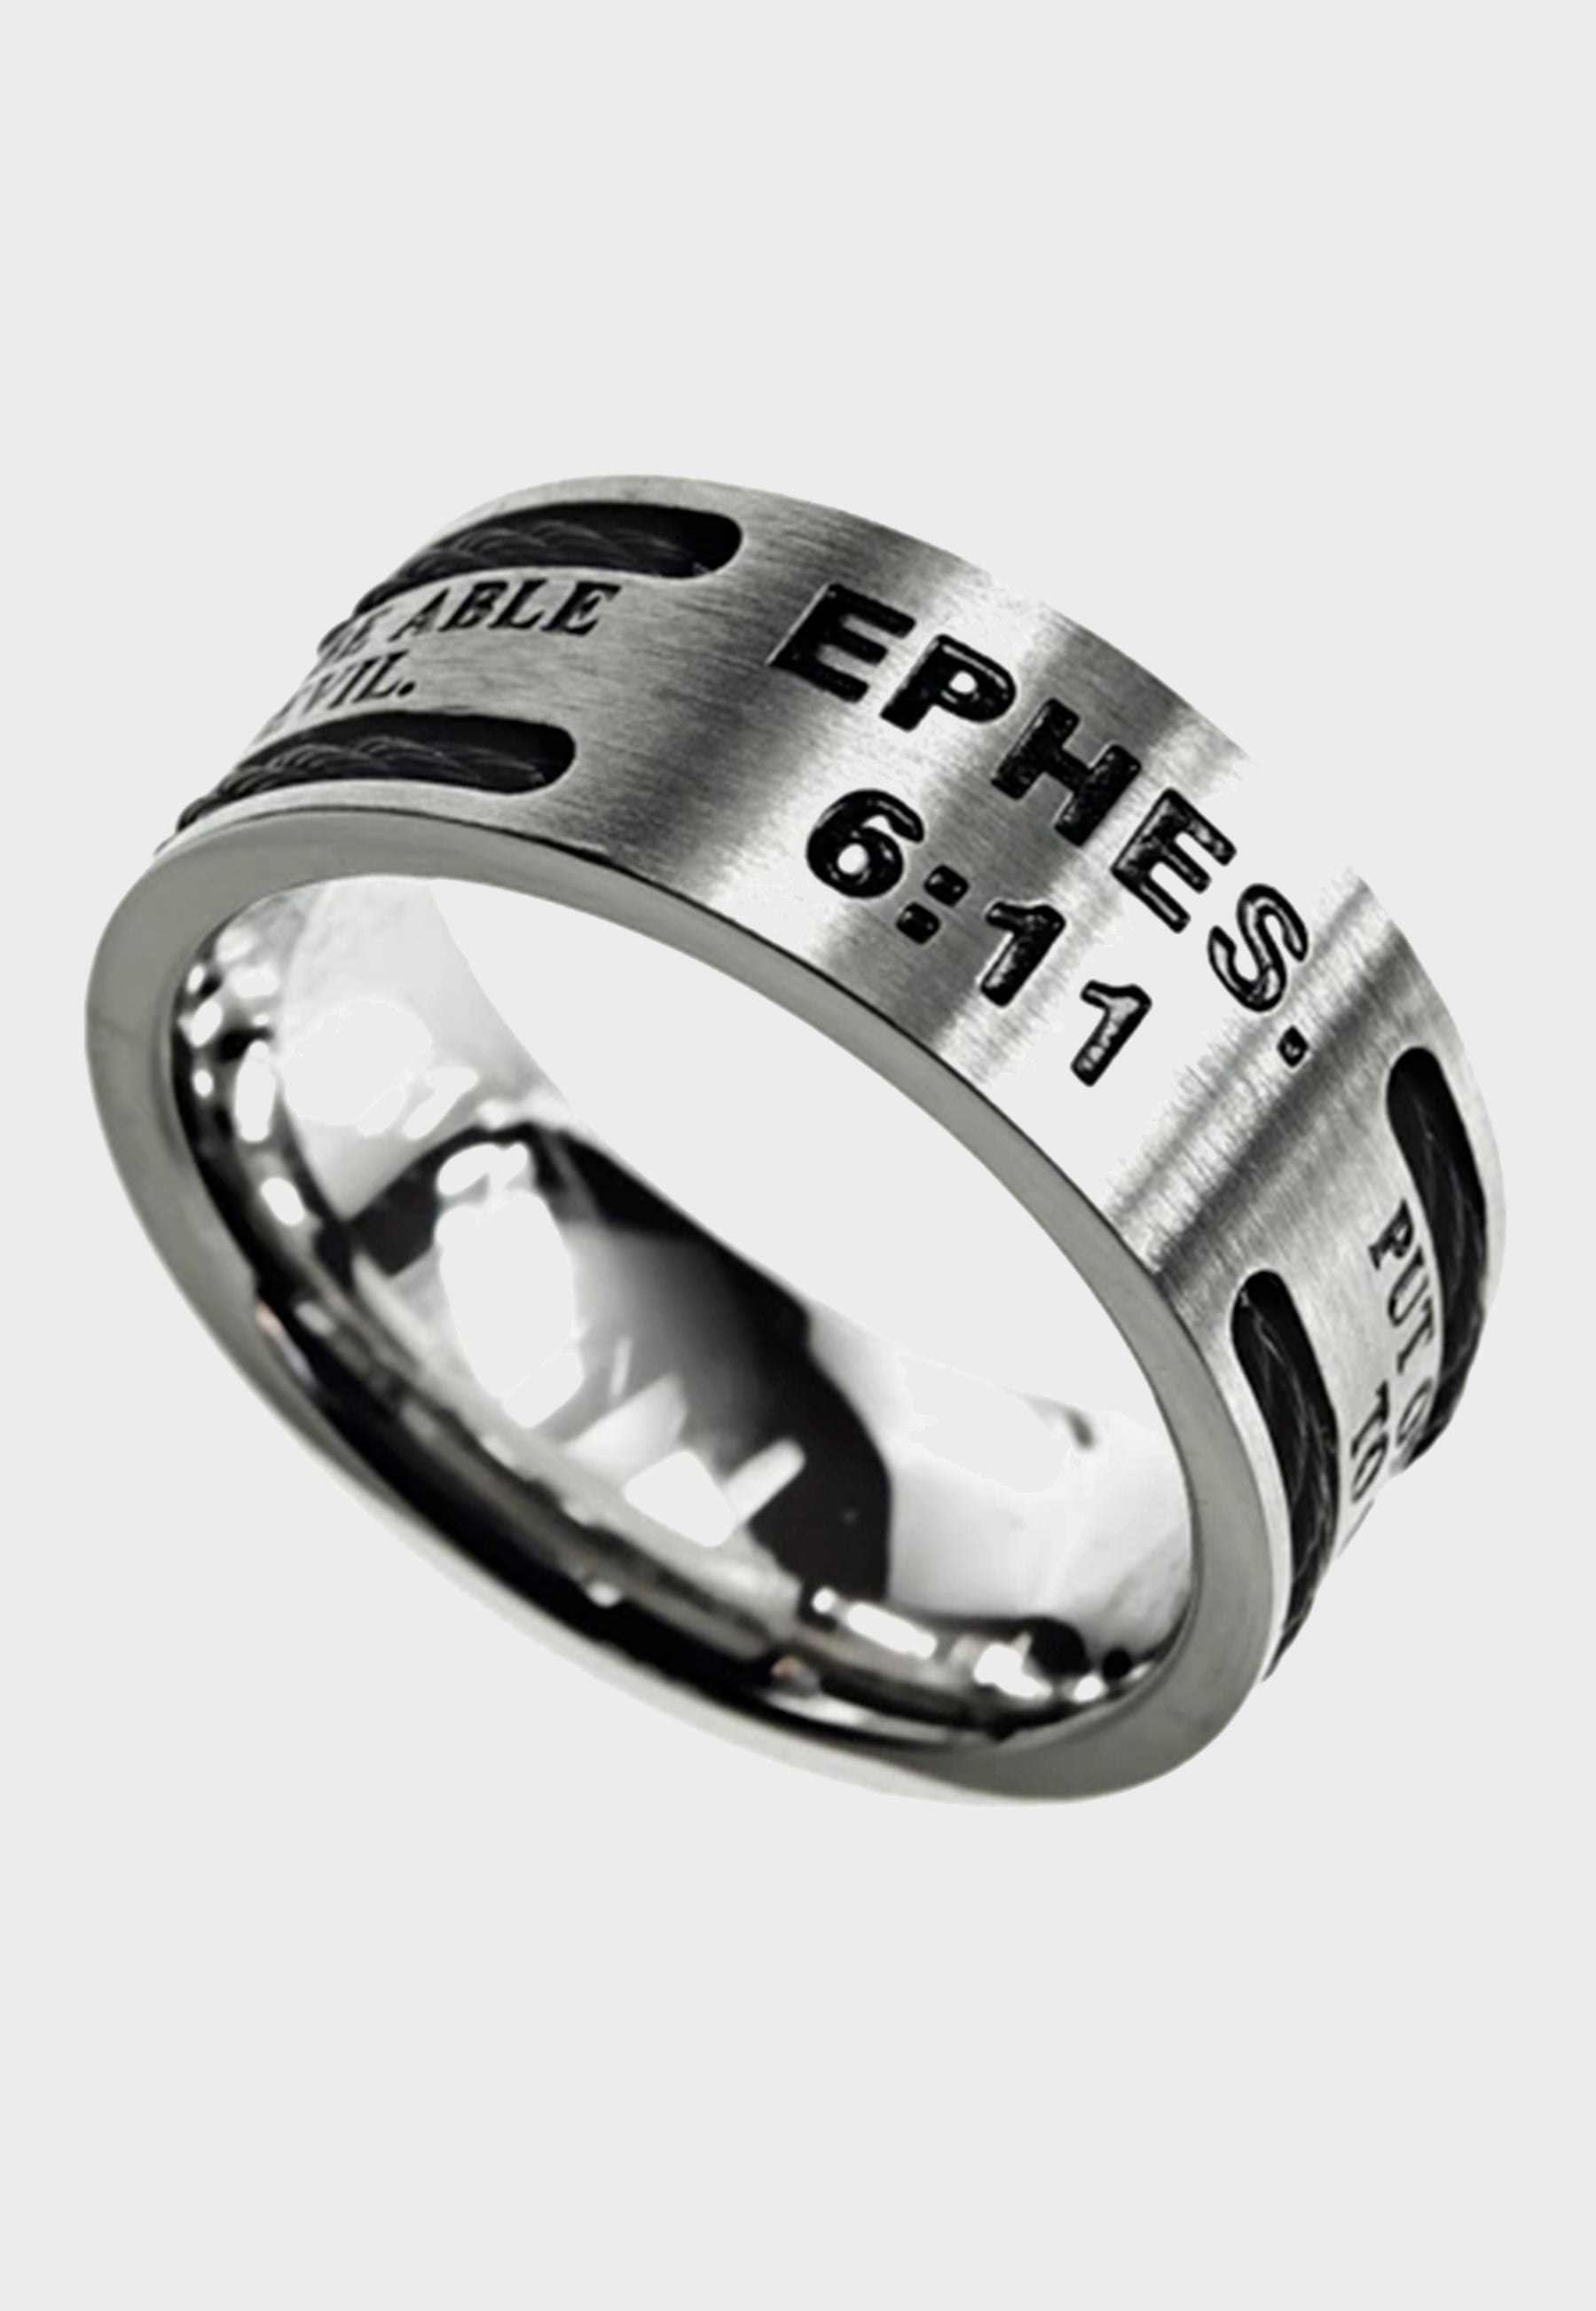 Ephesians 6:11 inscribed on men's Christian ring